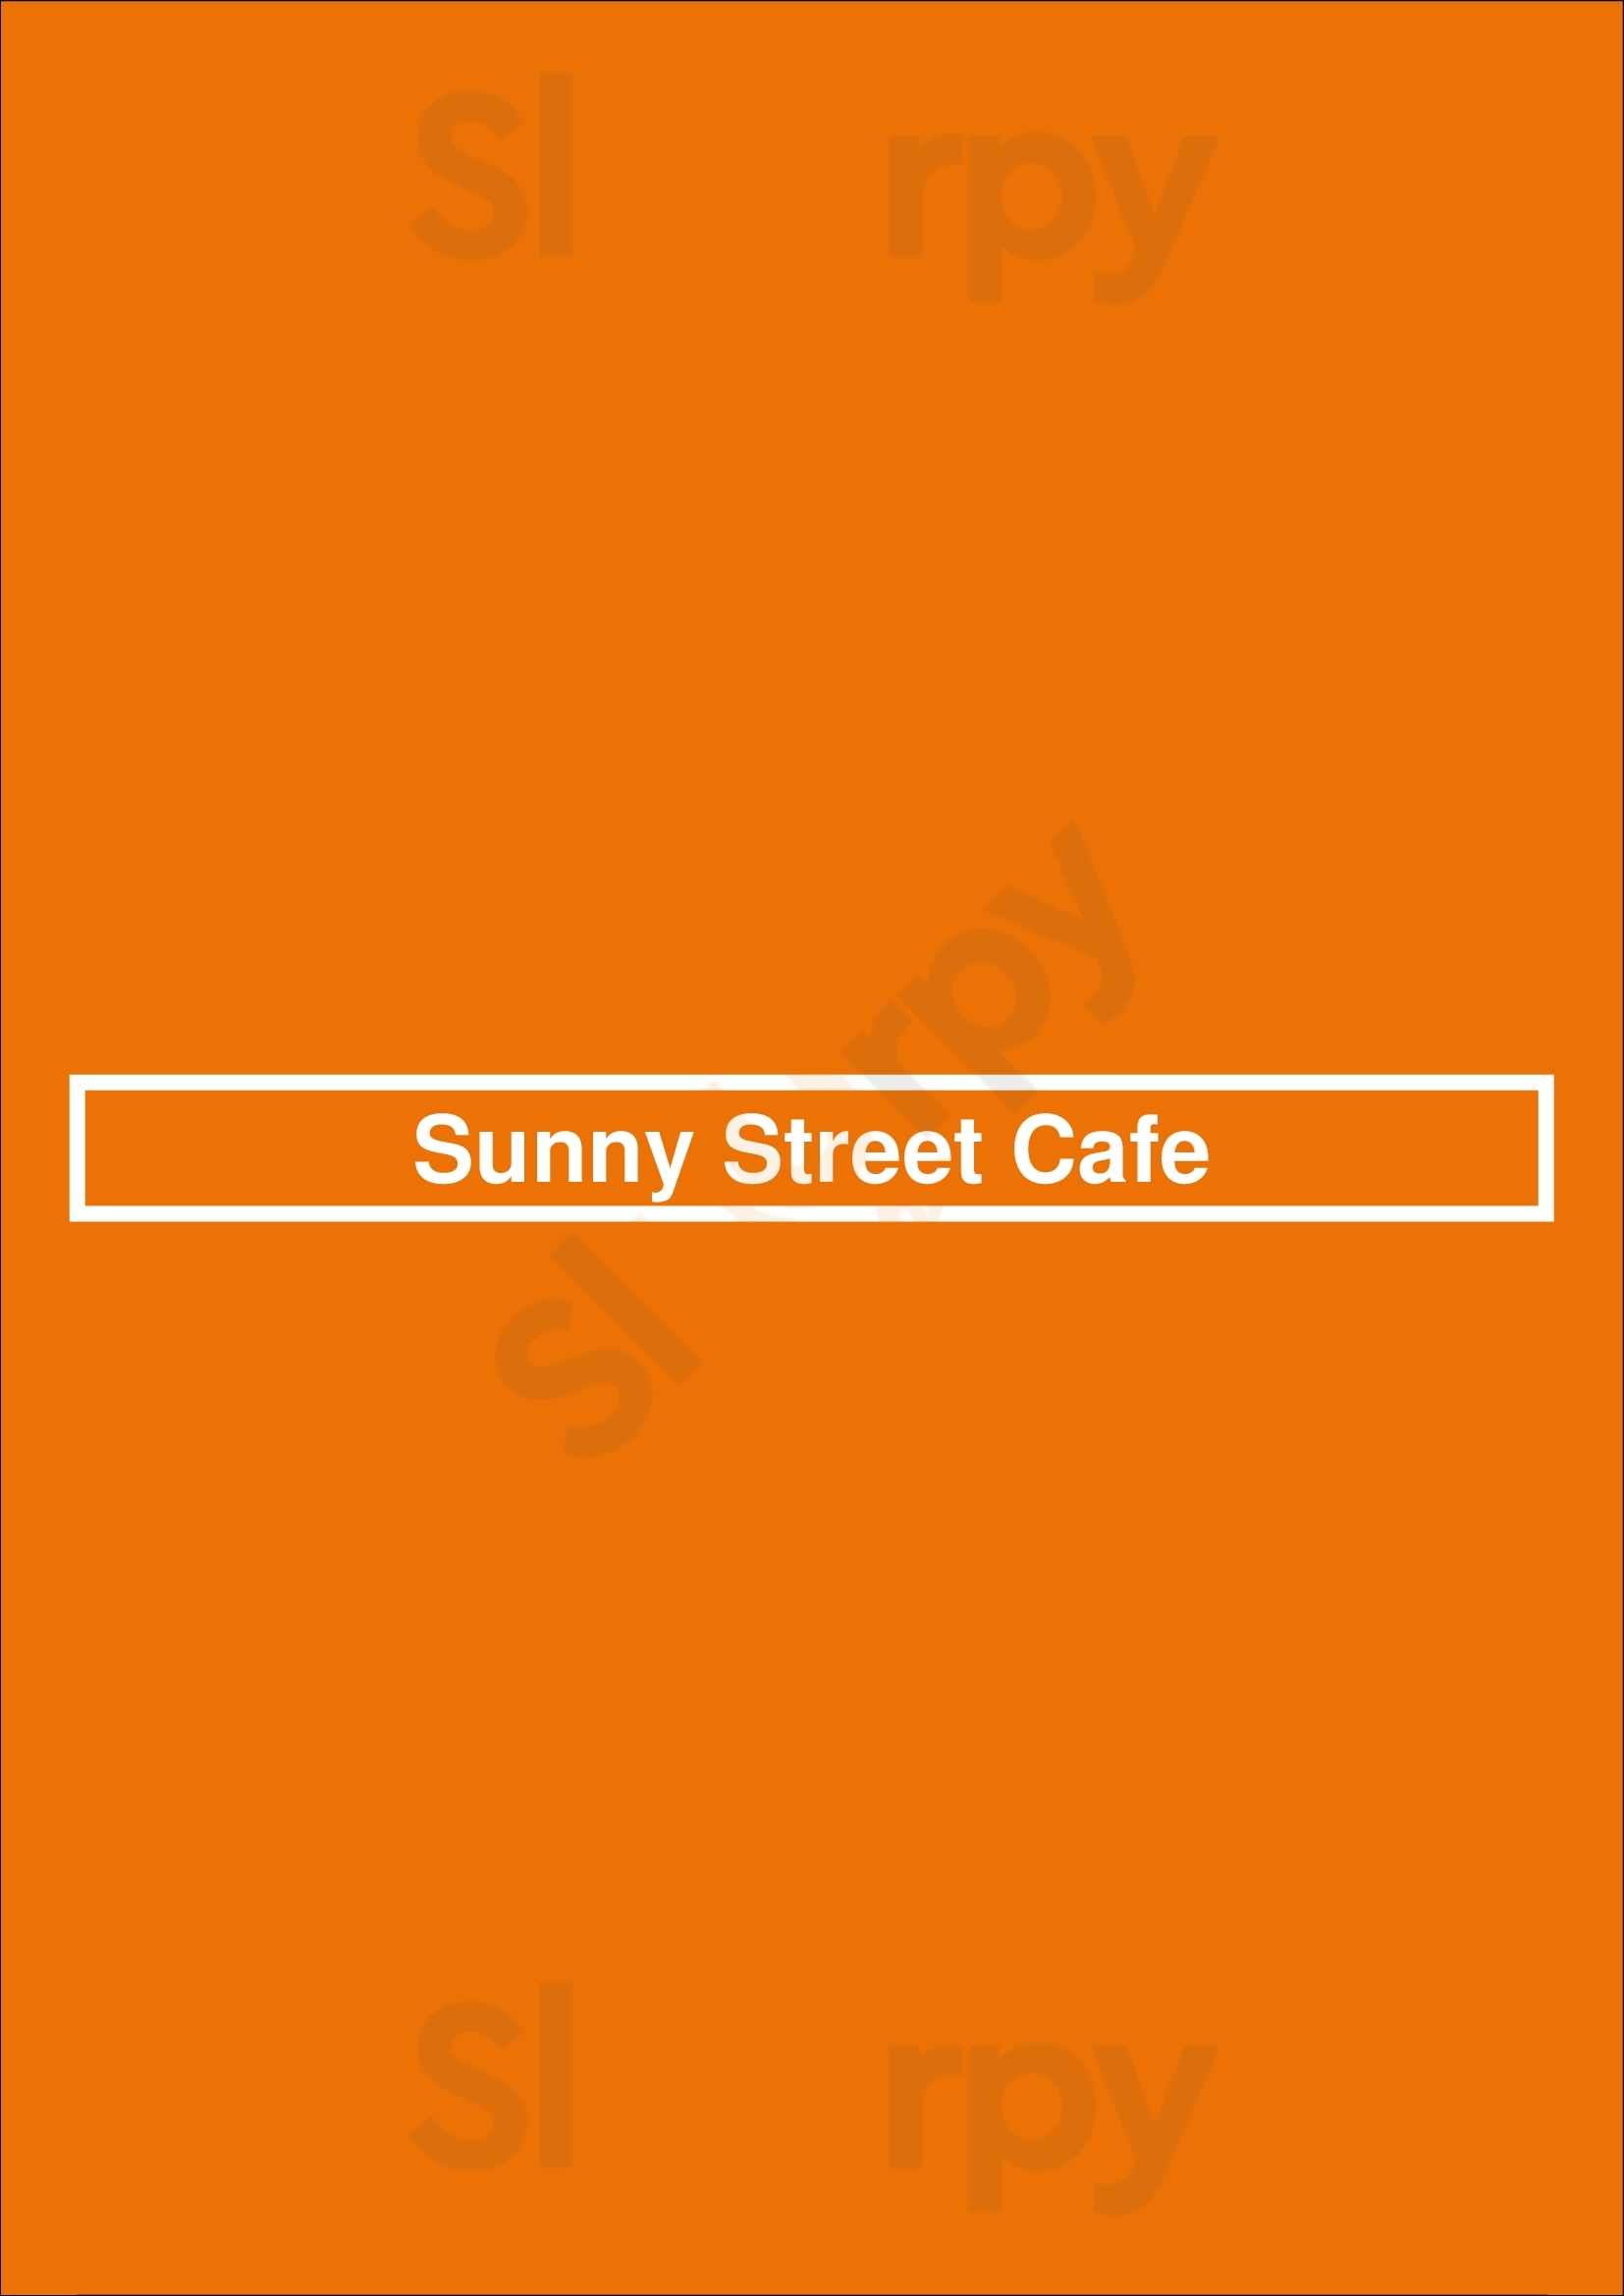 Sunny Street Cafe Dallas Menu - 1